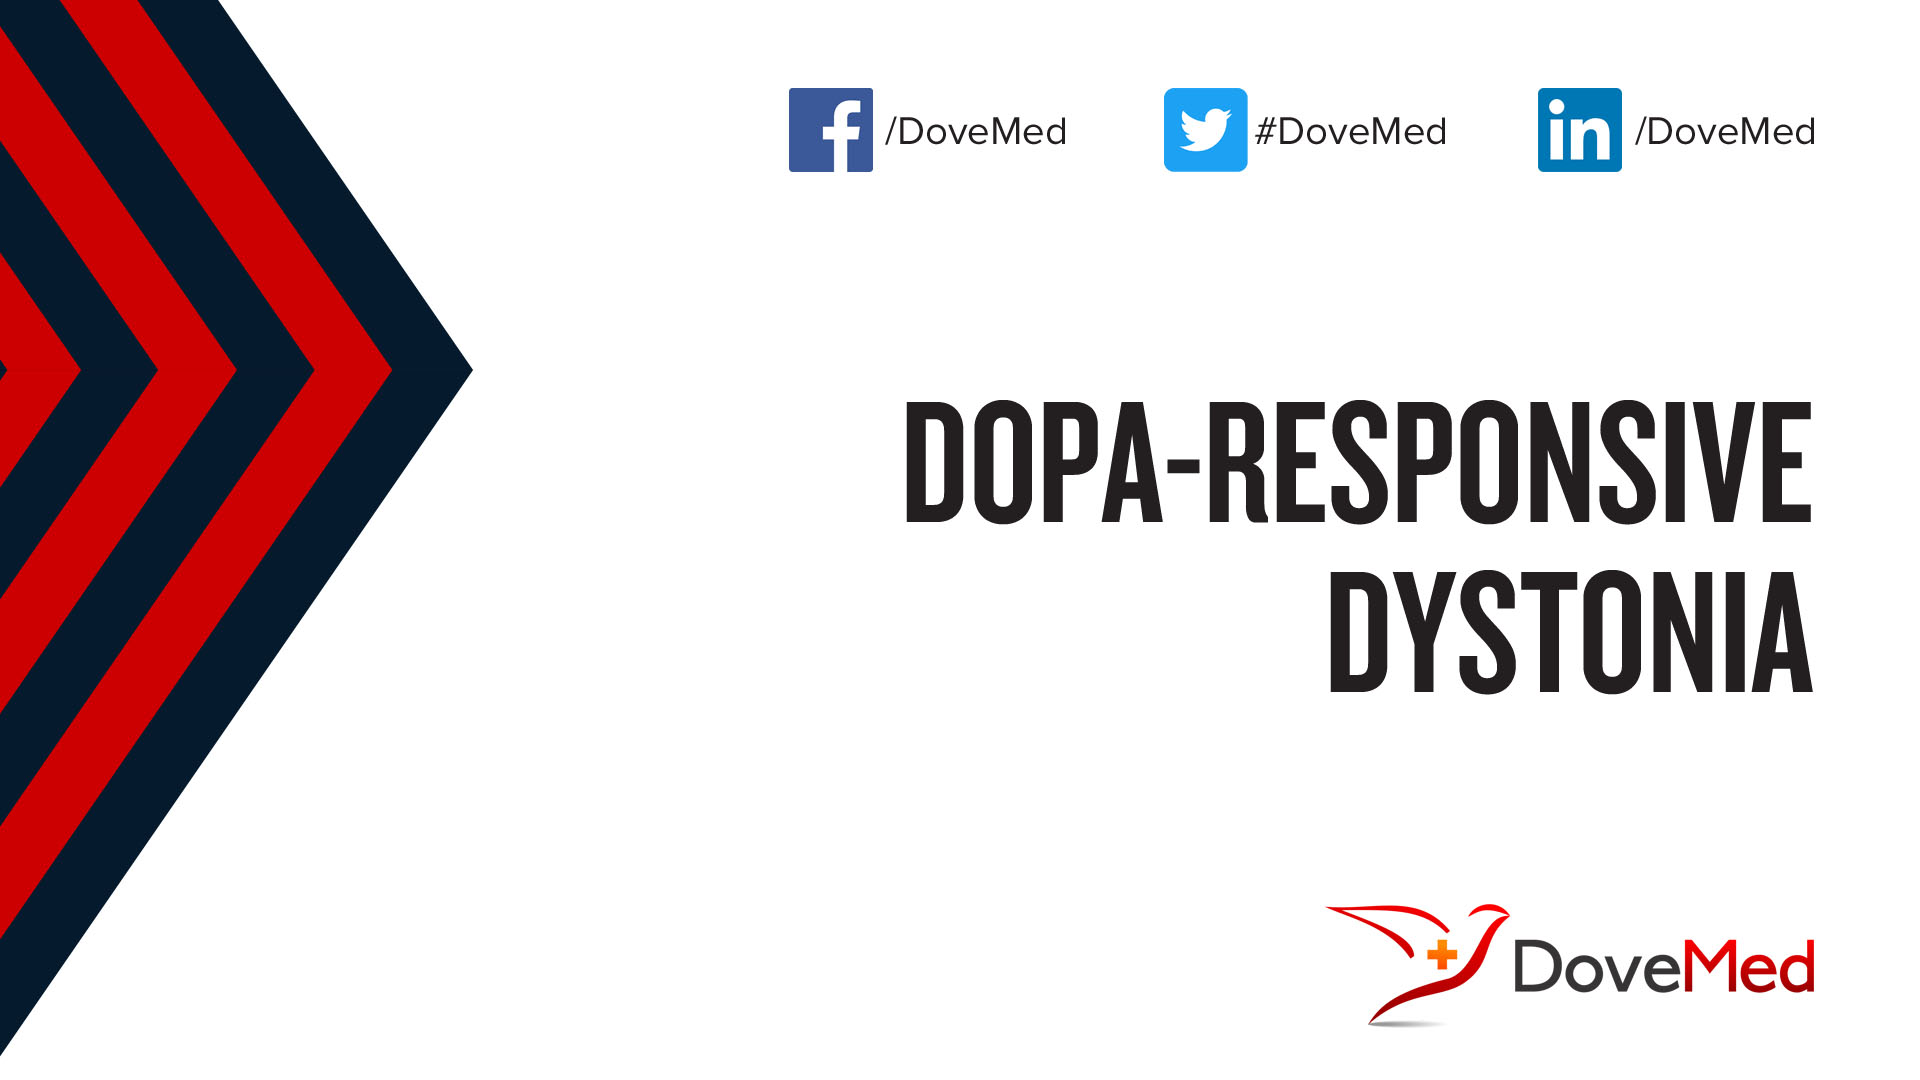 dopa-responsive-dystonia